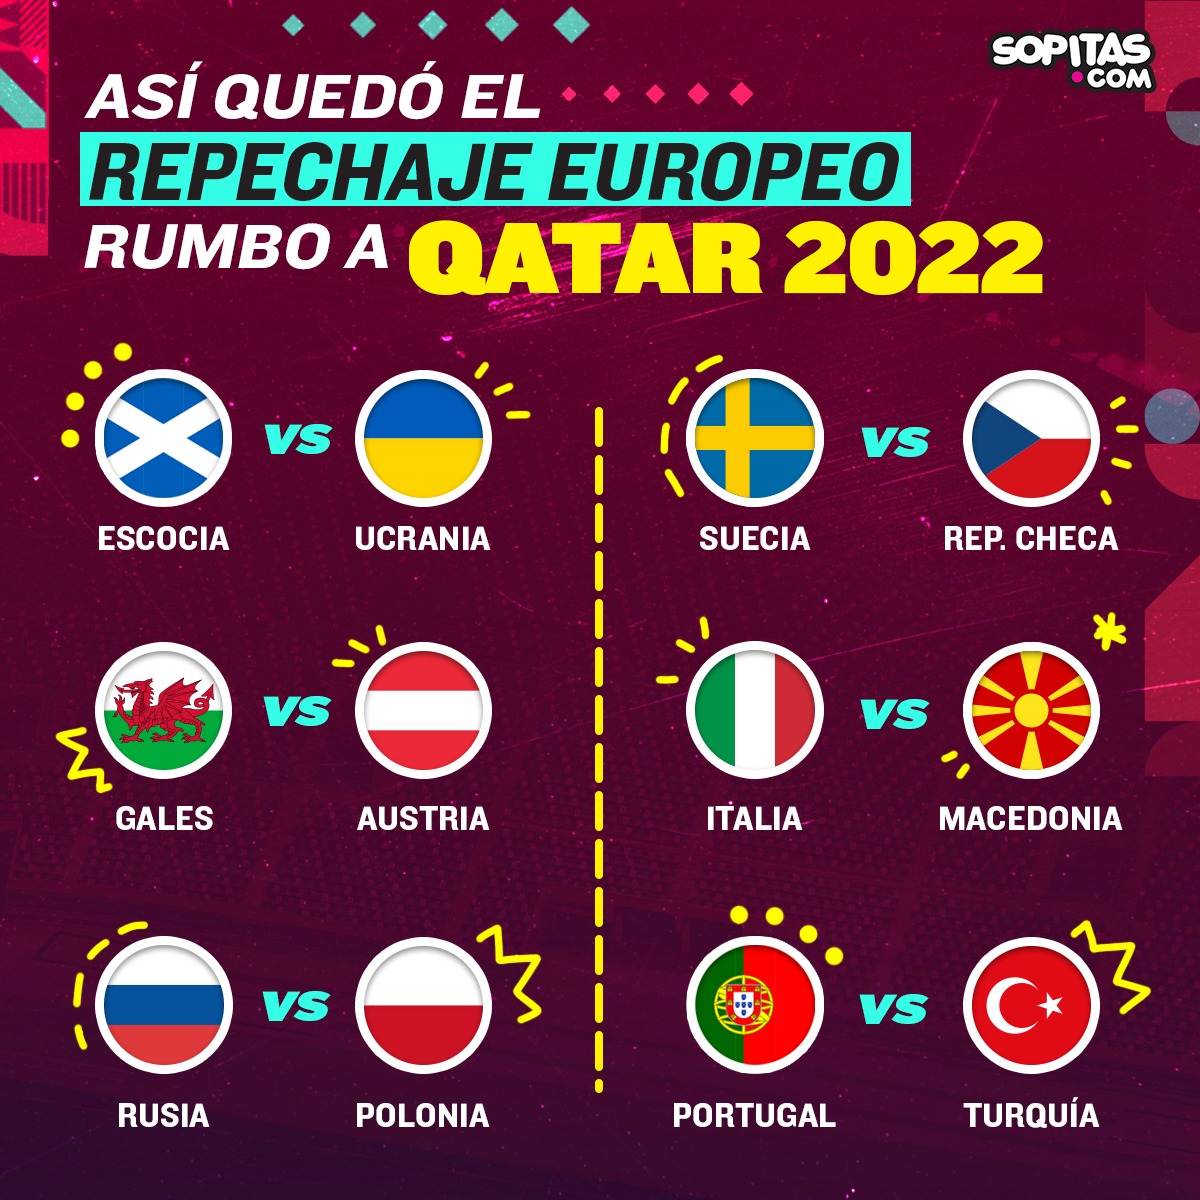 Repechaje de la UEFA rumbo a Qatar 2022